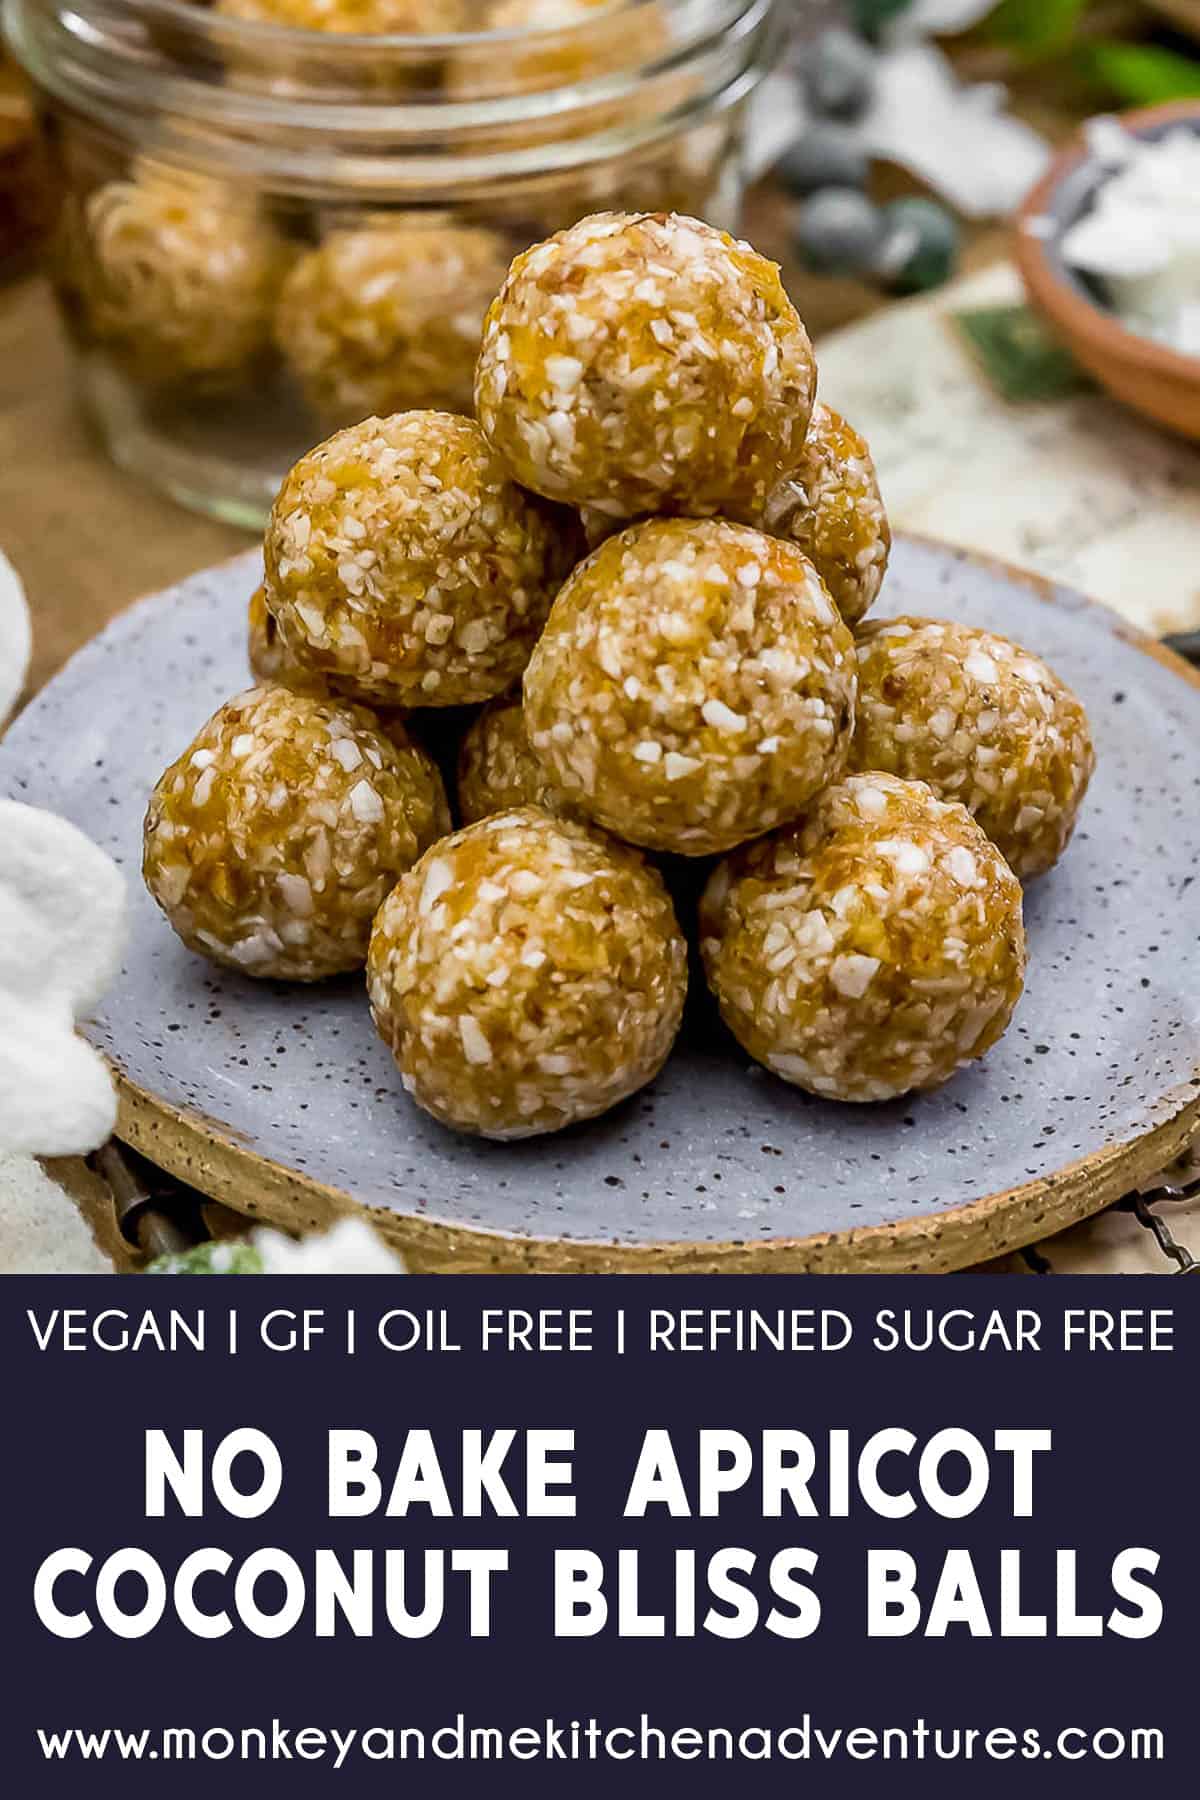 No Bake Apricot-Coconut Bliss Balls with text description